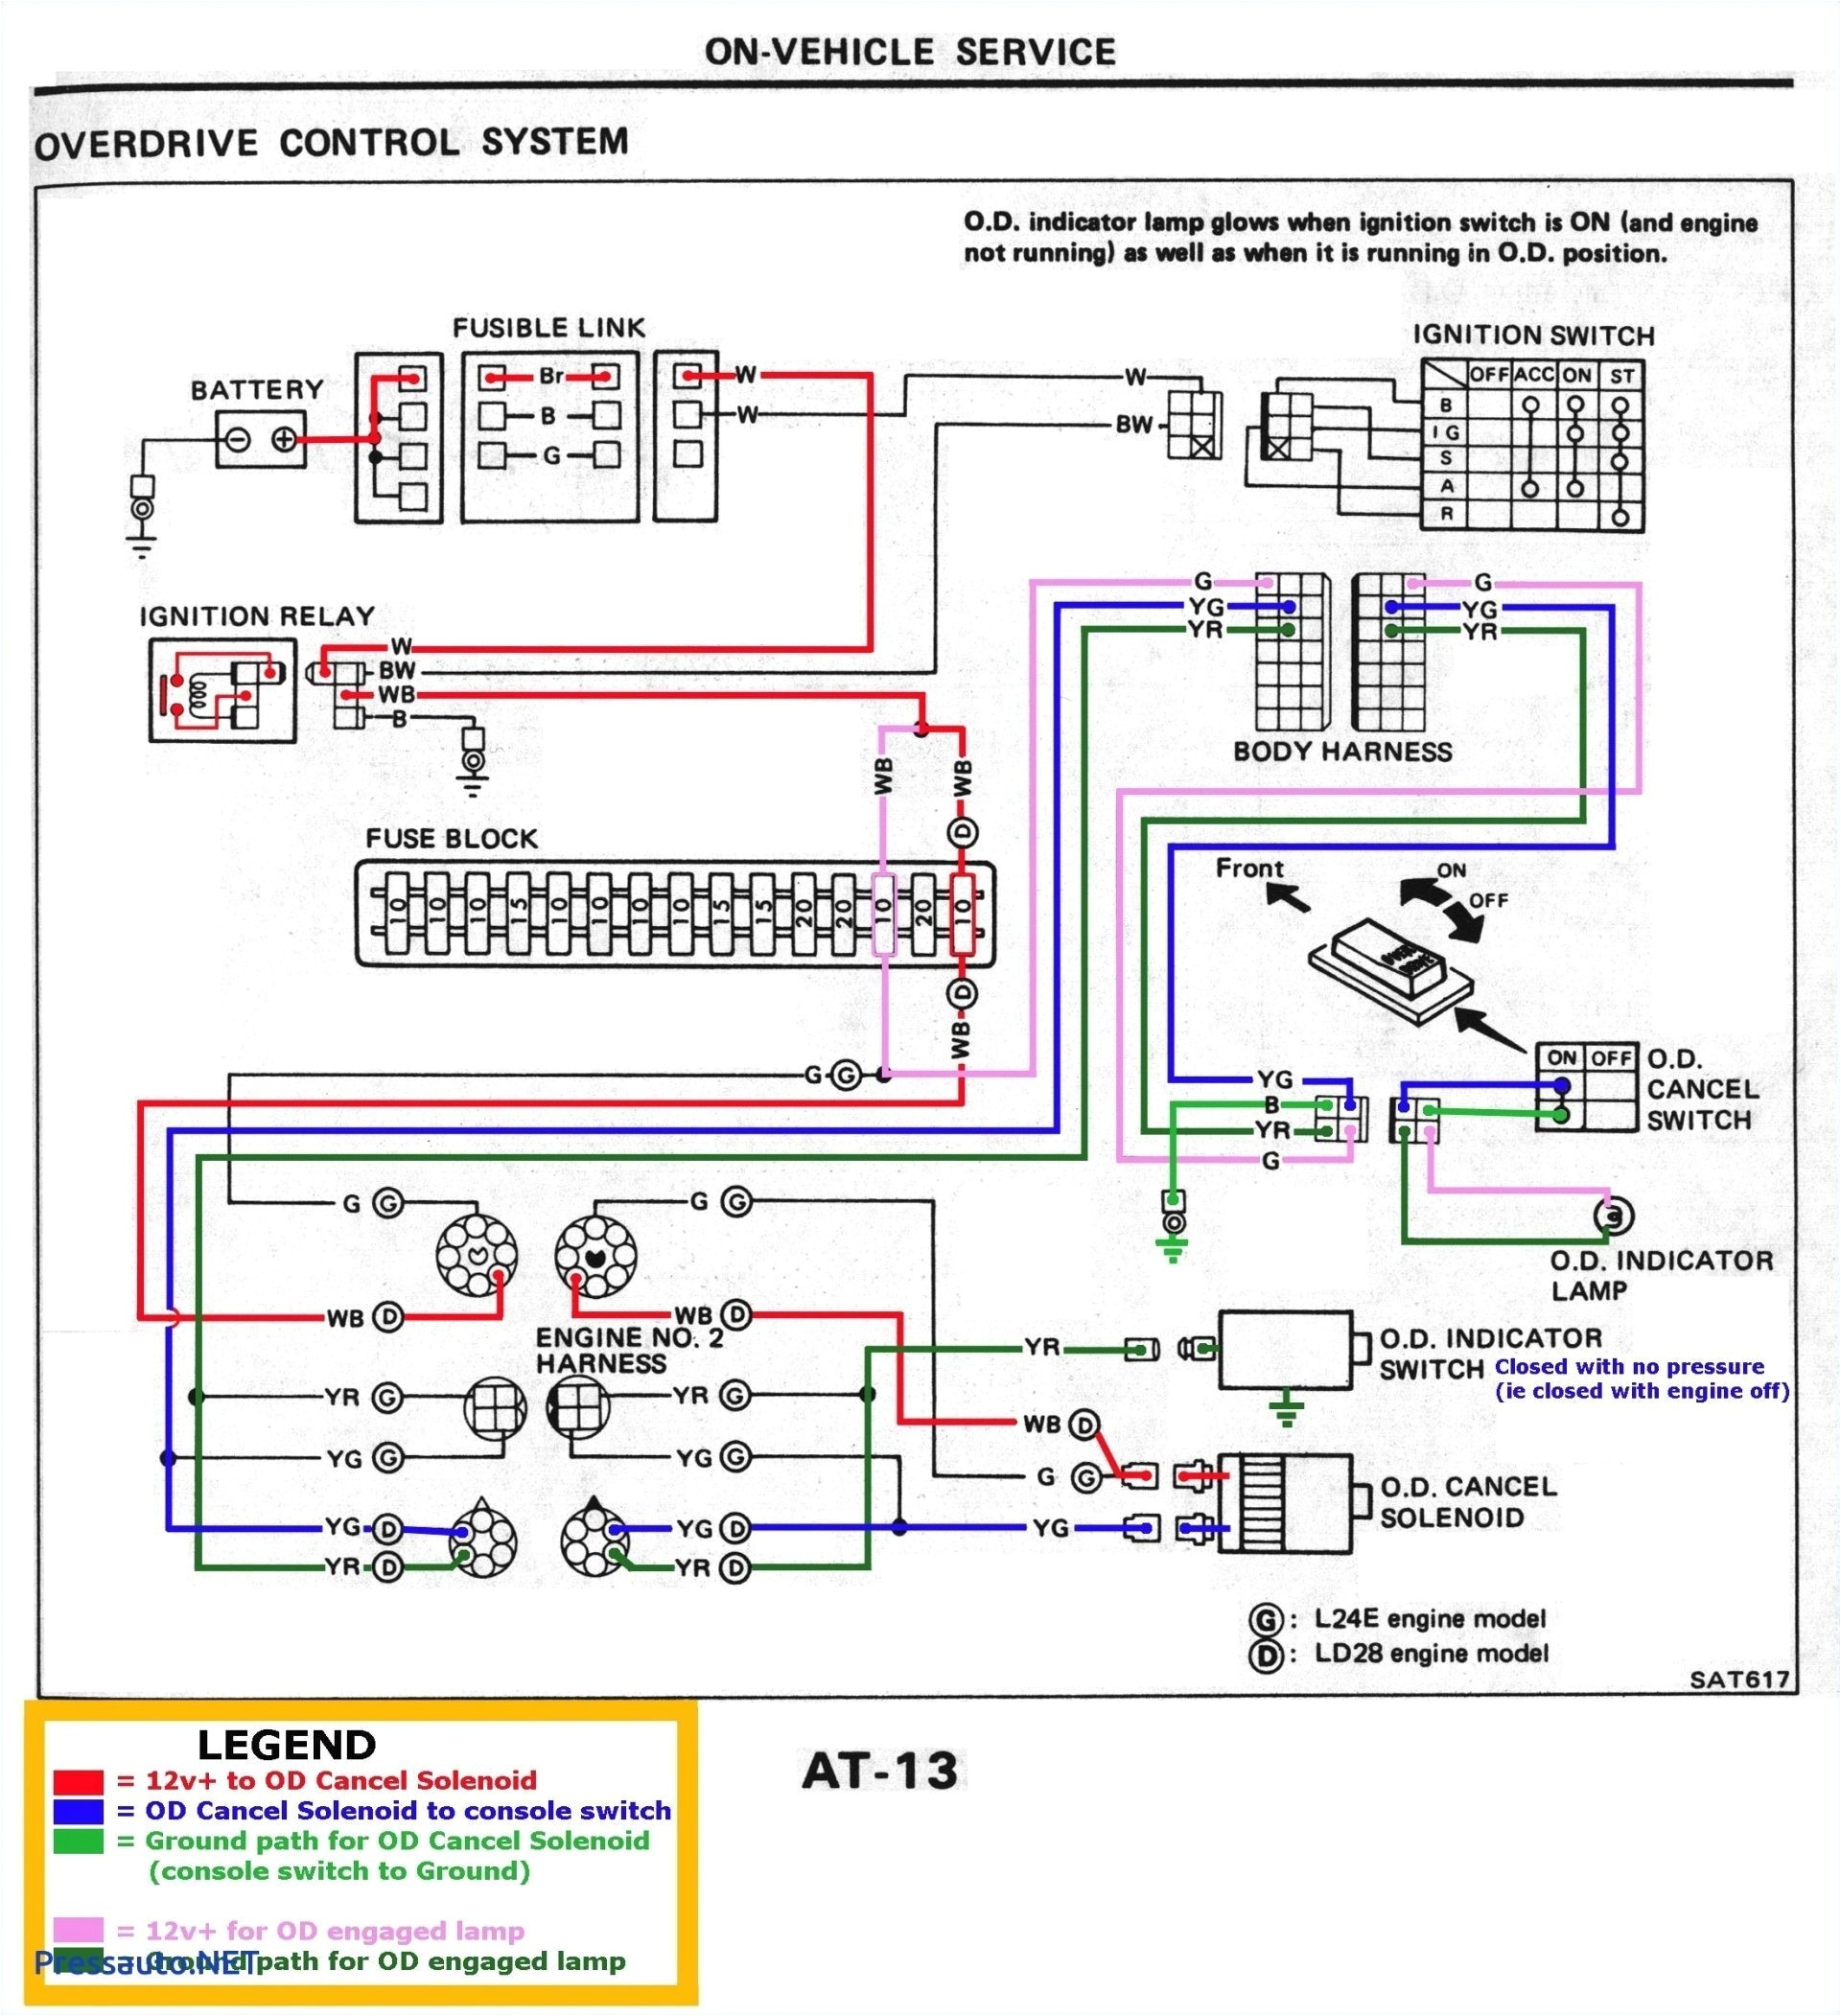 Sx440 Avr Wiring Diagram Wiring Diagram Avr Sx440 4 Avr as440 Domainadvice org